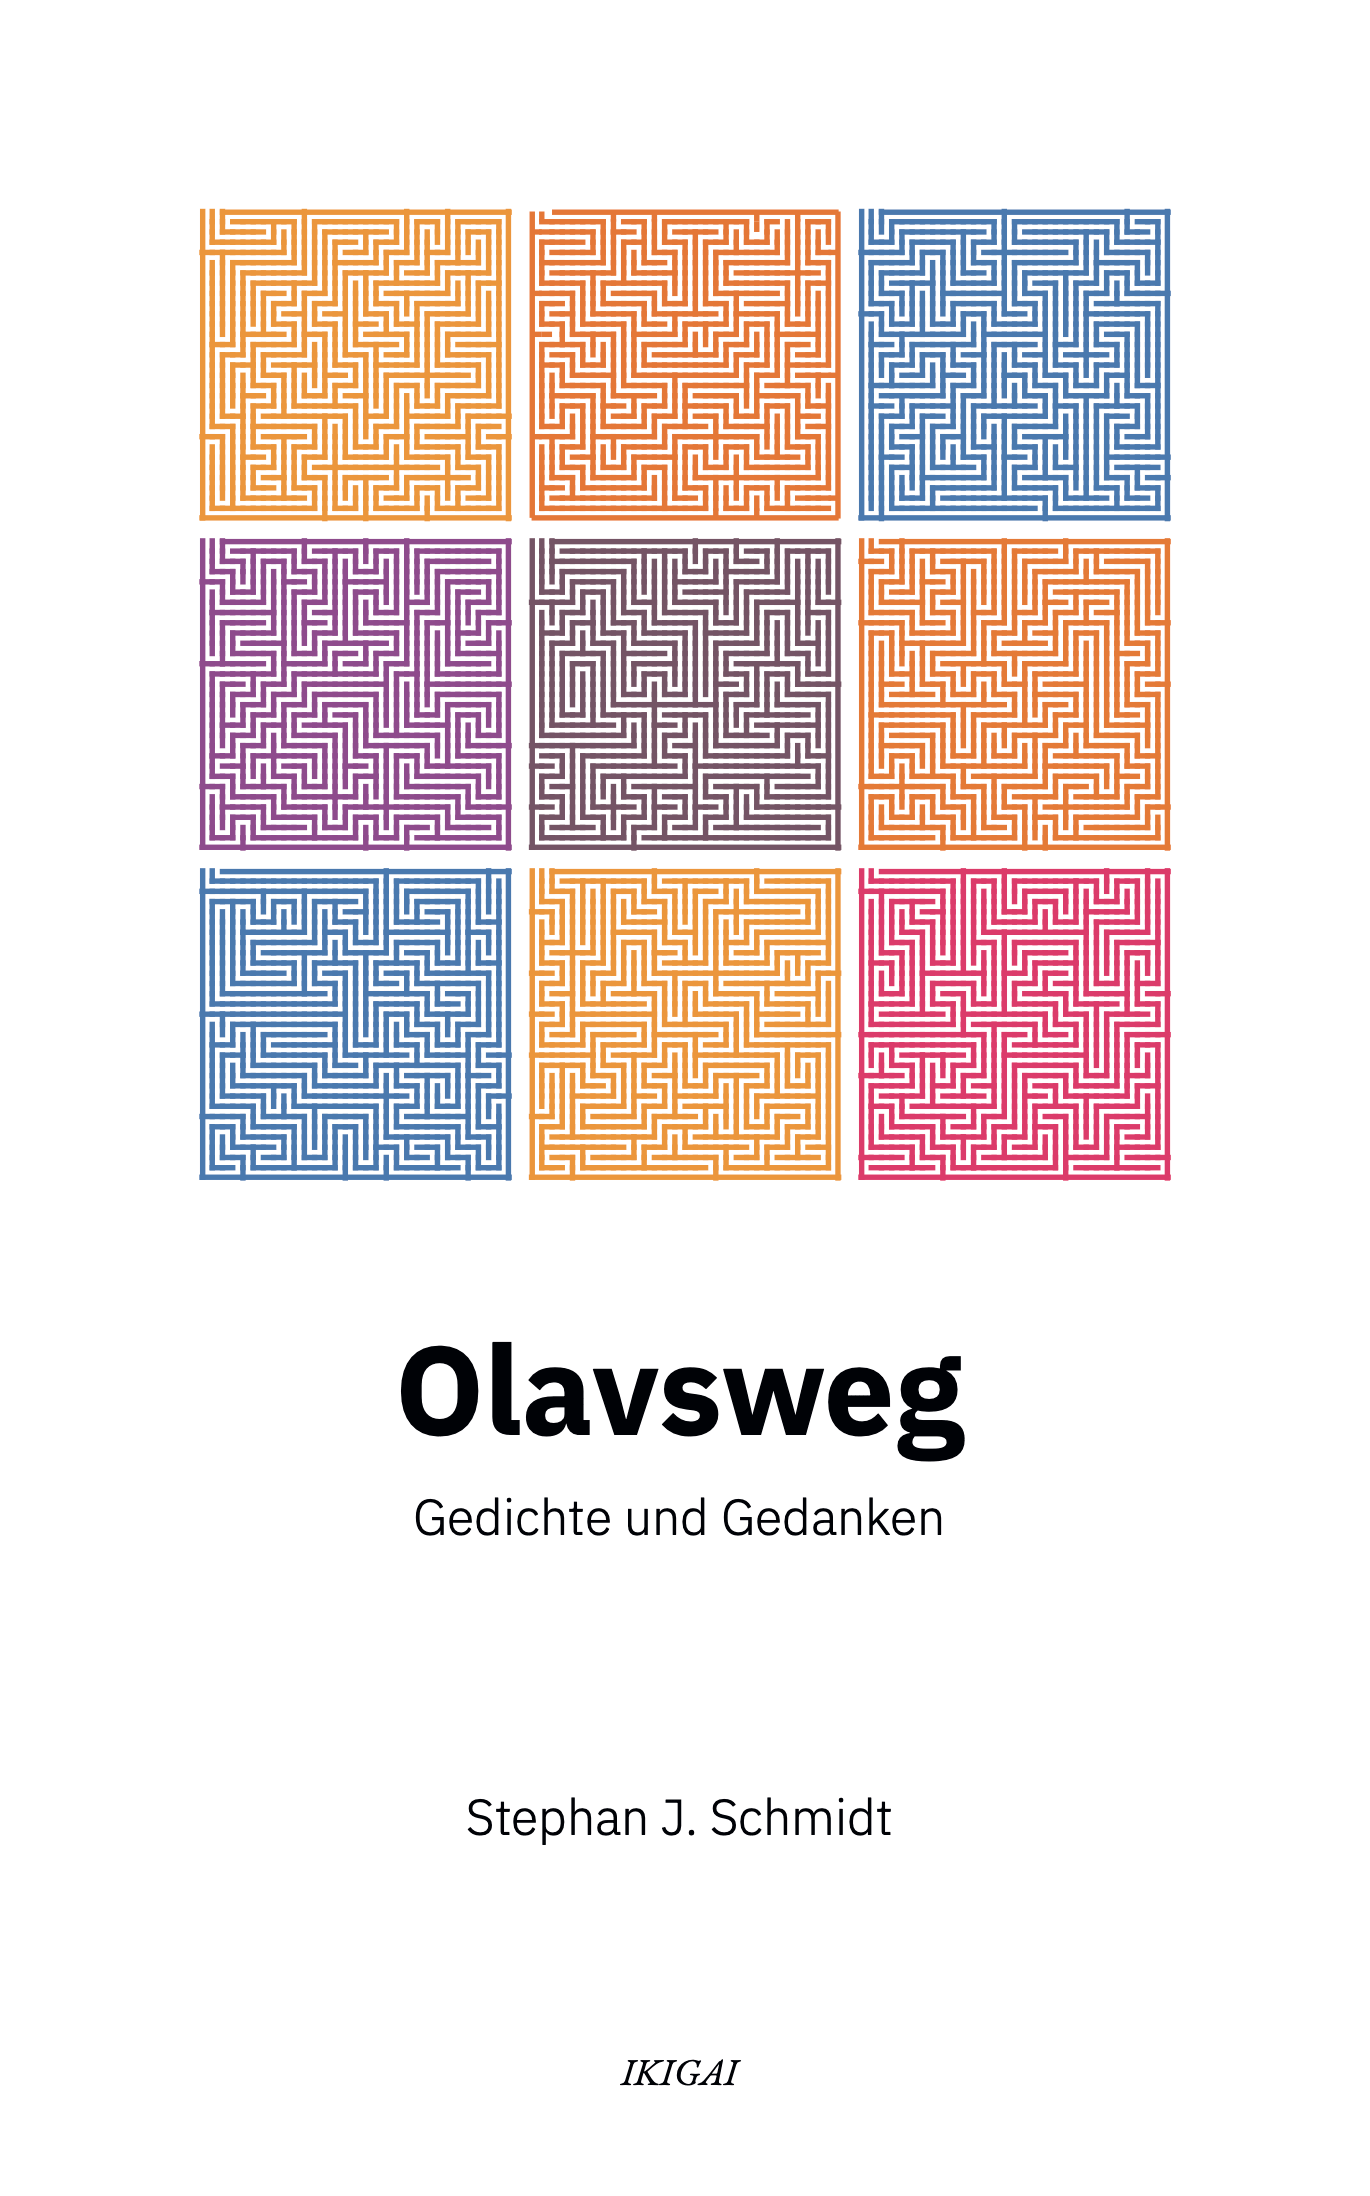 Olafsweg Gedichte und Lyrik Buch